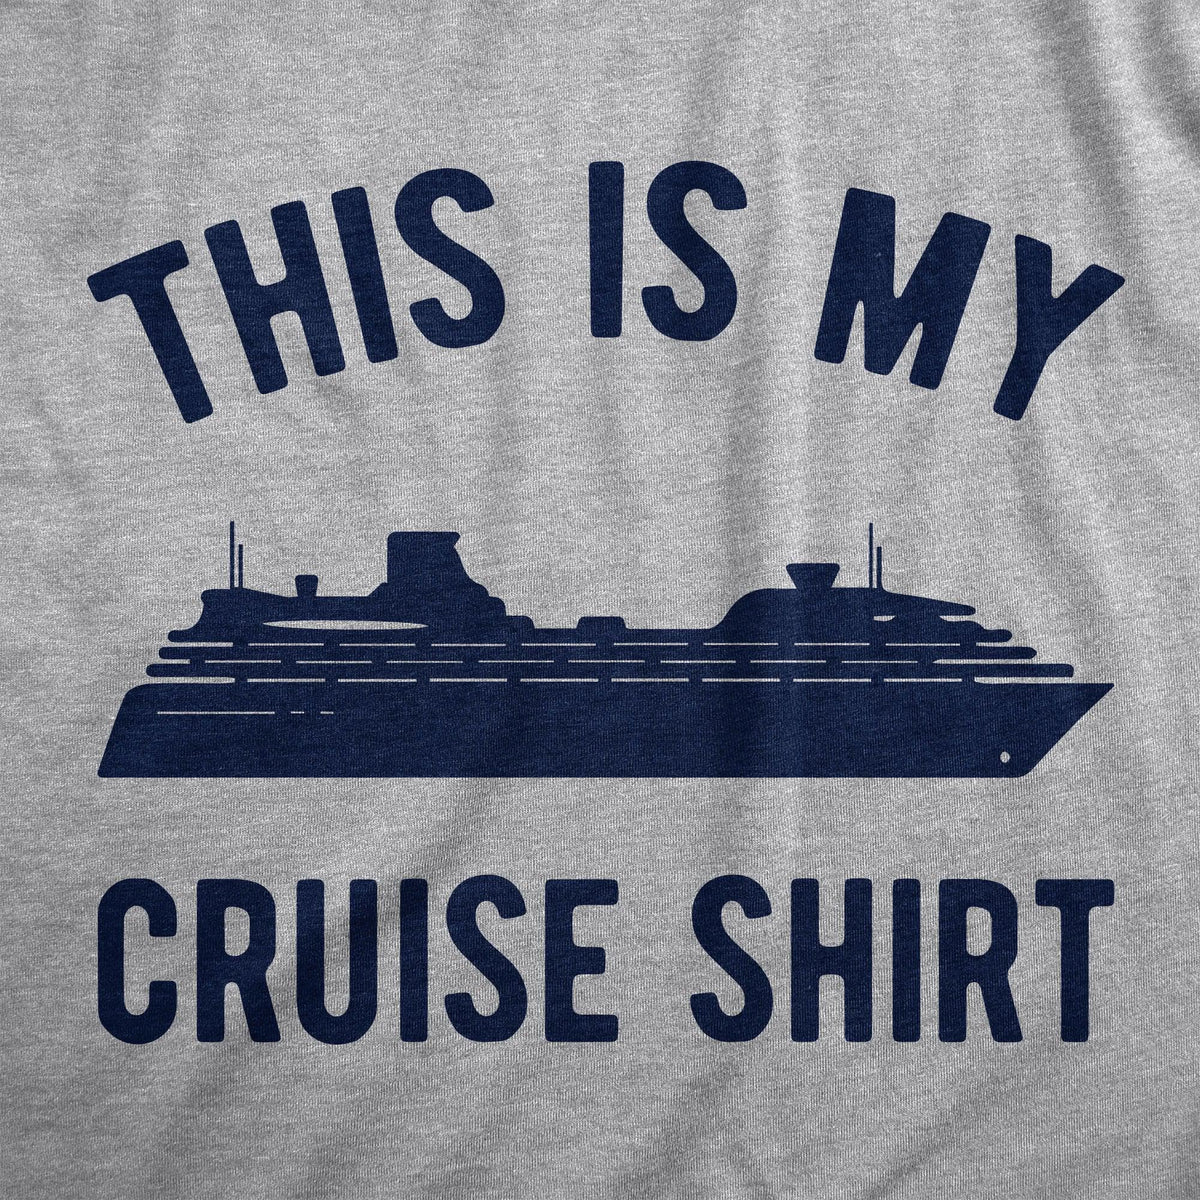 This Is My Cruise Shirt Men&#39;s Tshirt  -  Crazy Dog T-Shirts